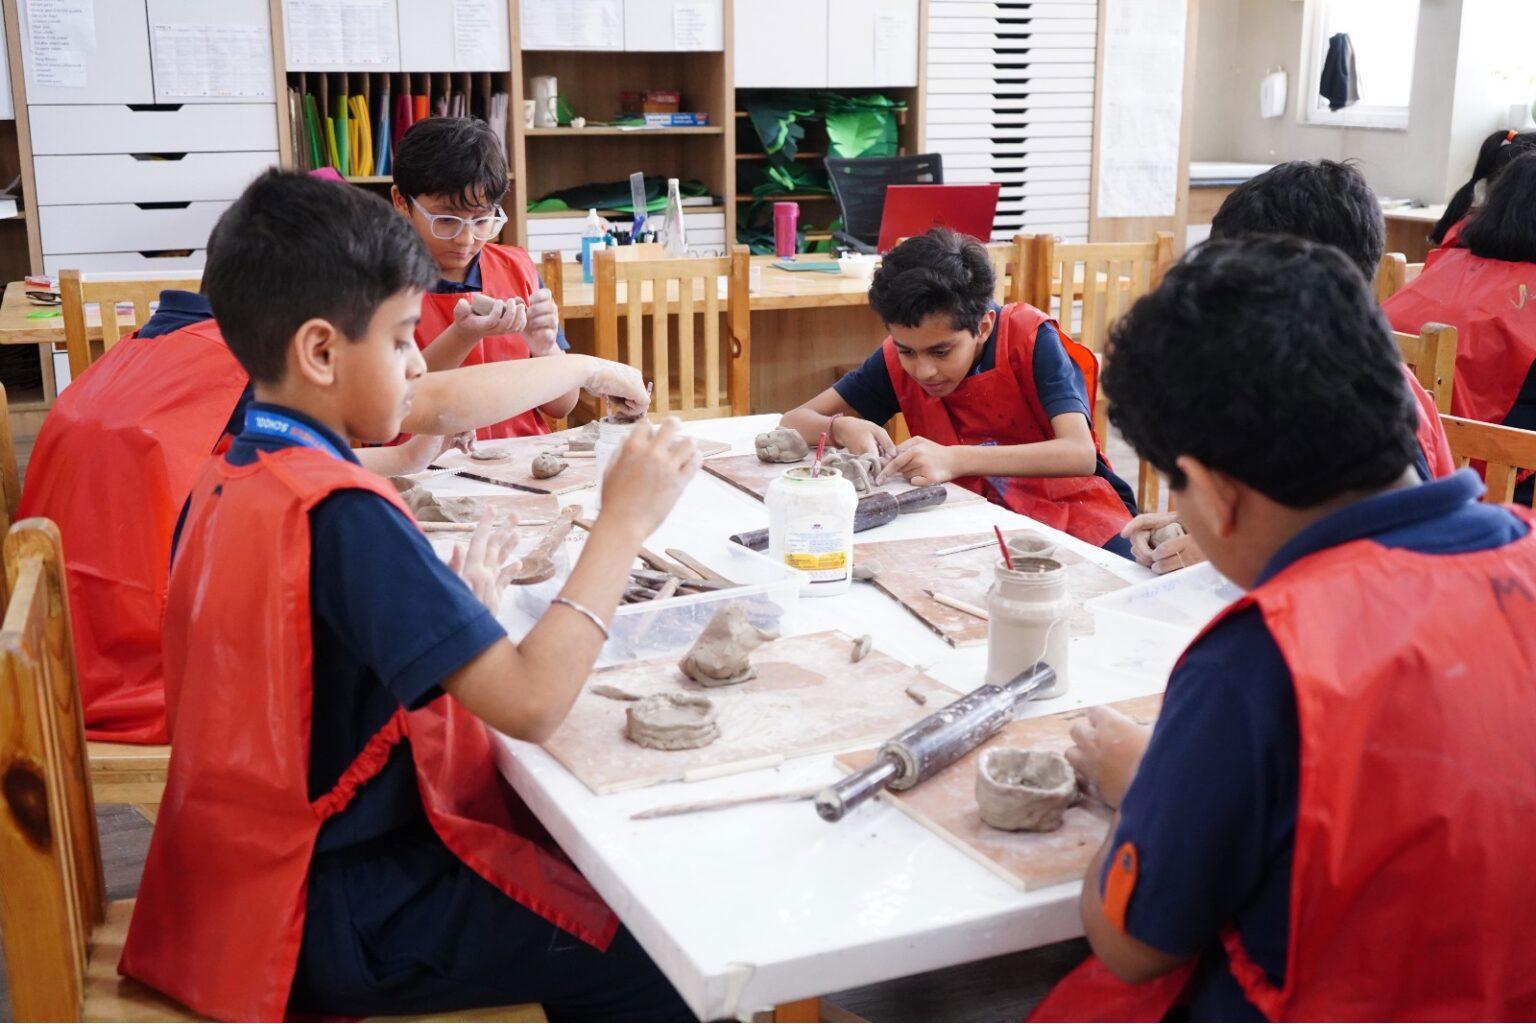 Prometheus School’s Visual Arts Studio saw PYP students display their creative skills using clay.